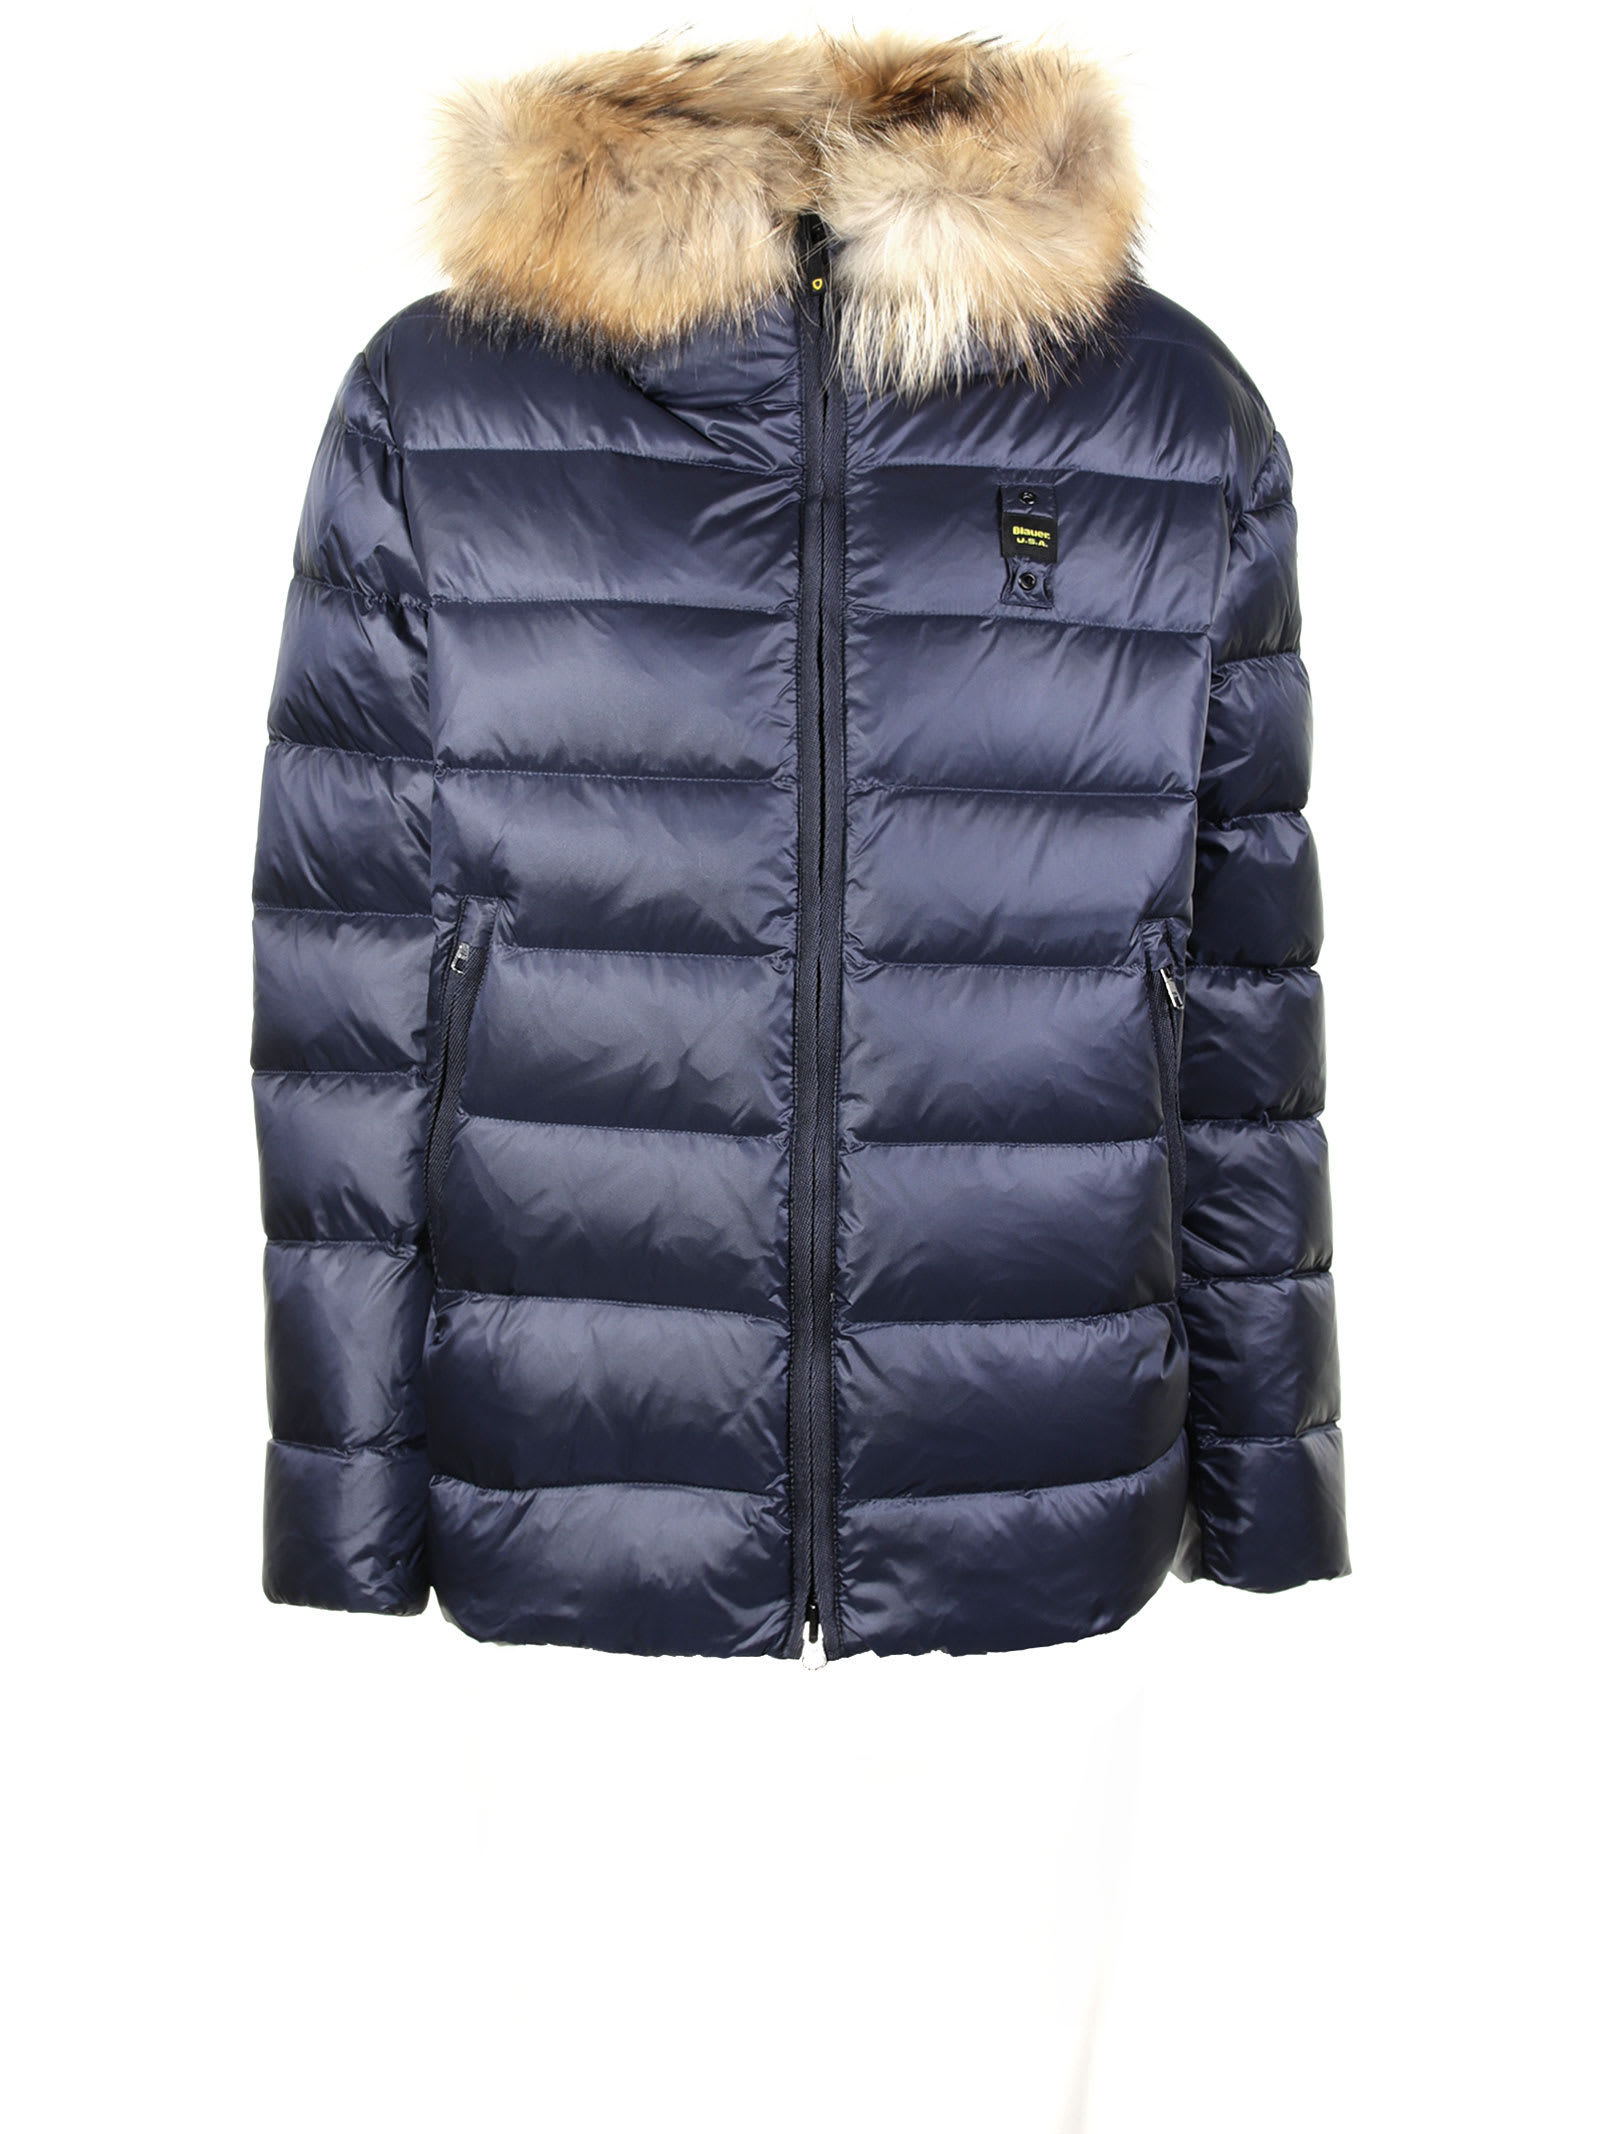 Blauer Jacket With Fur Hood